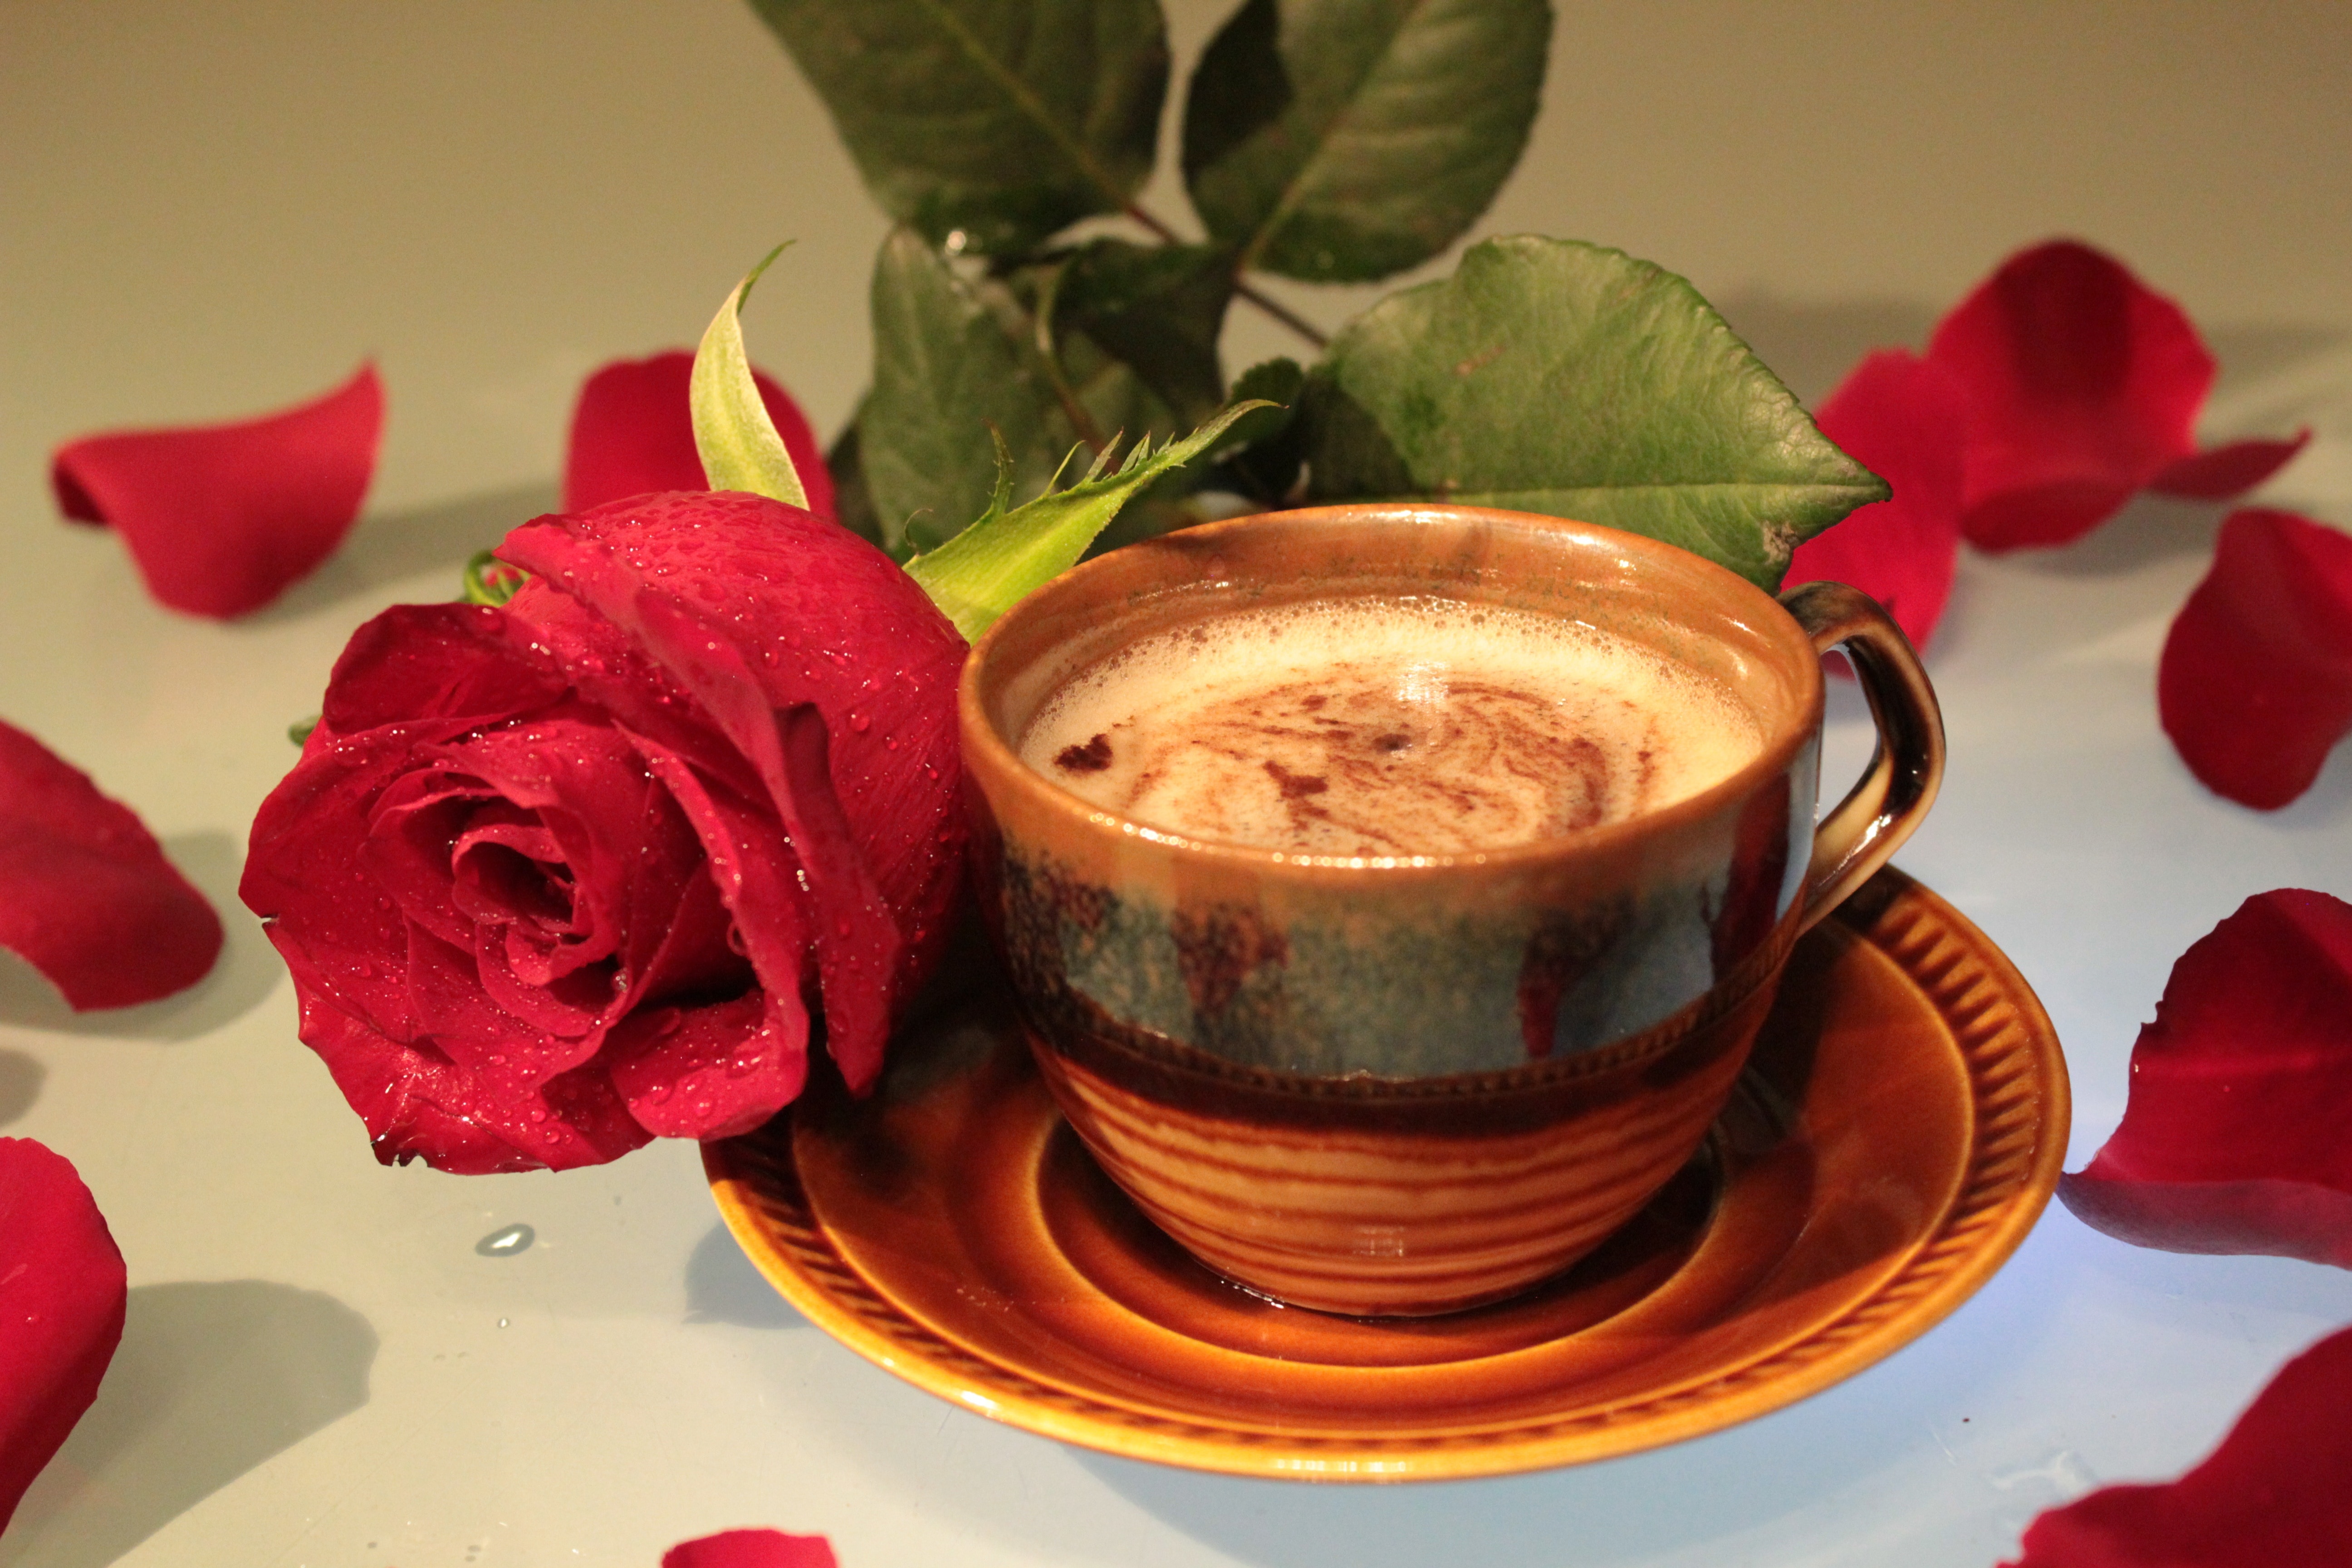 brown and black ceramic teacup on brown ceramic round plate